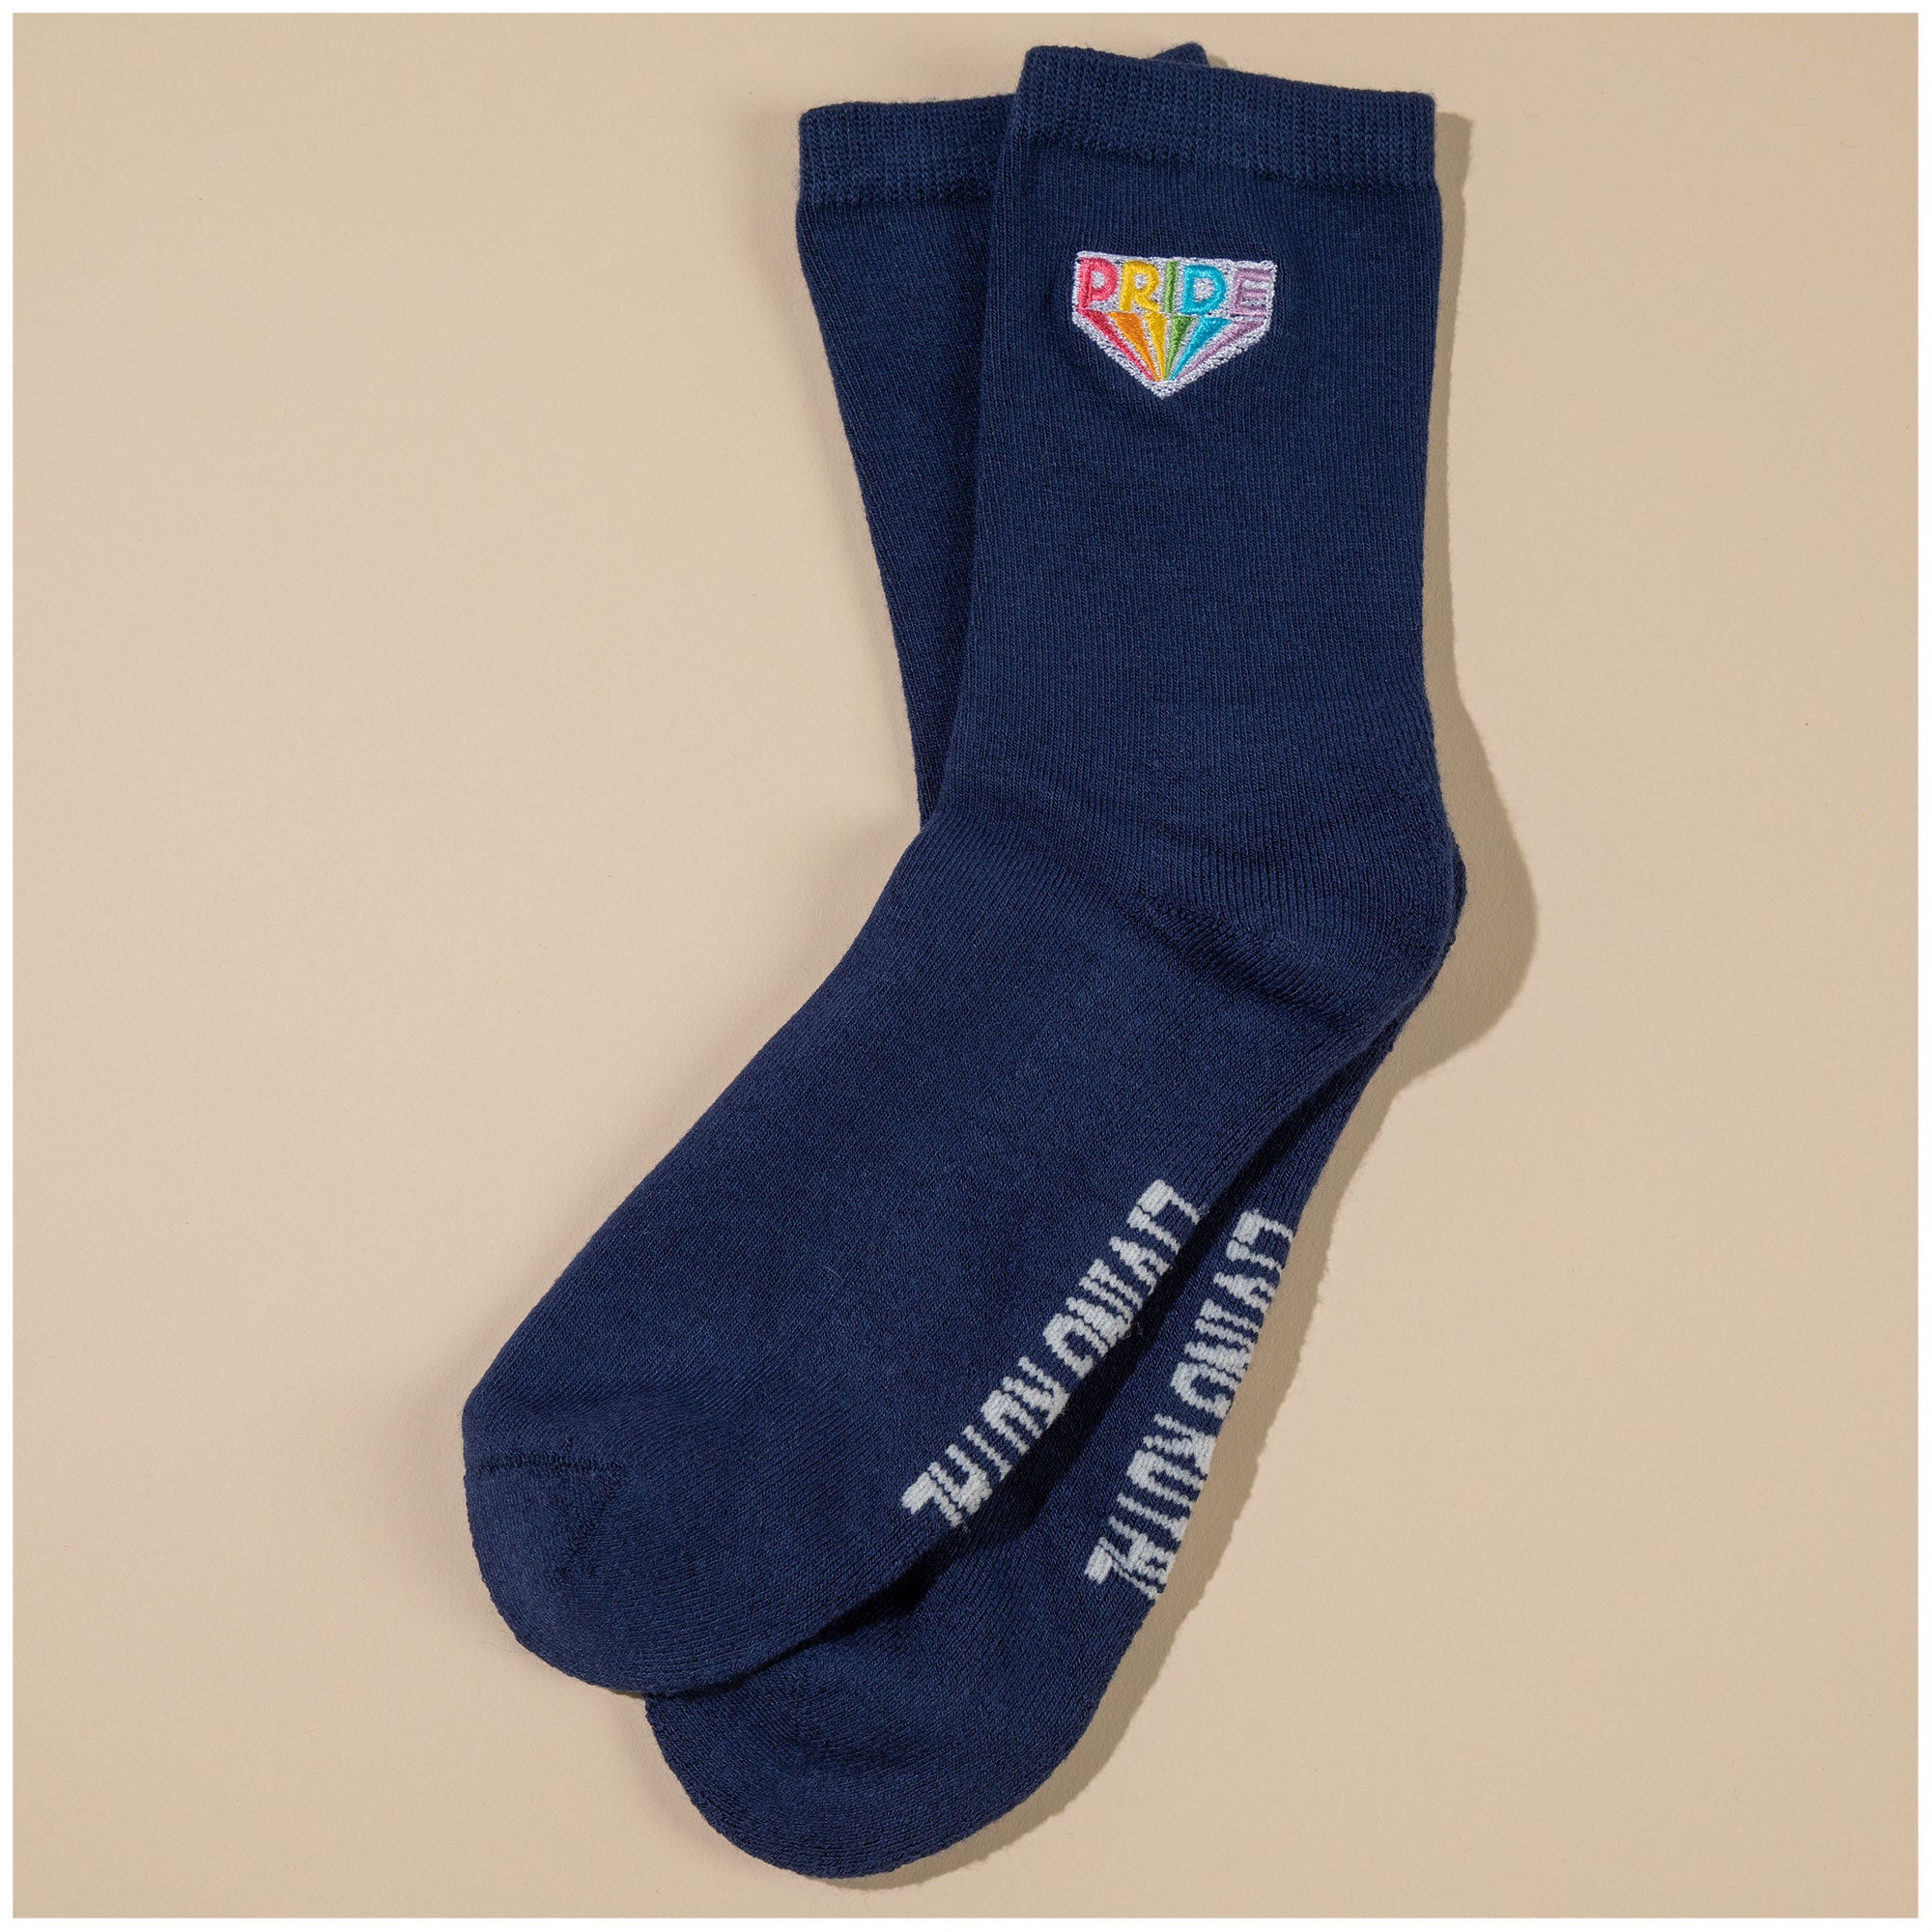 Living Royal Charity Crew Socks - Pride